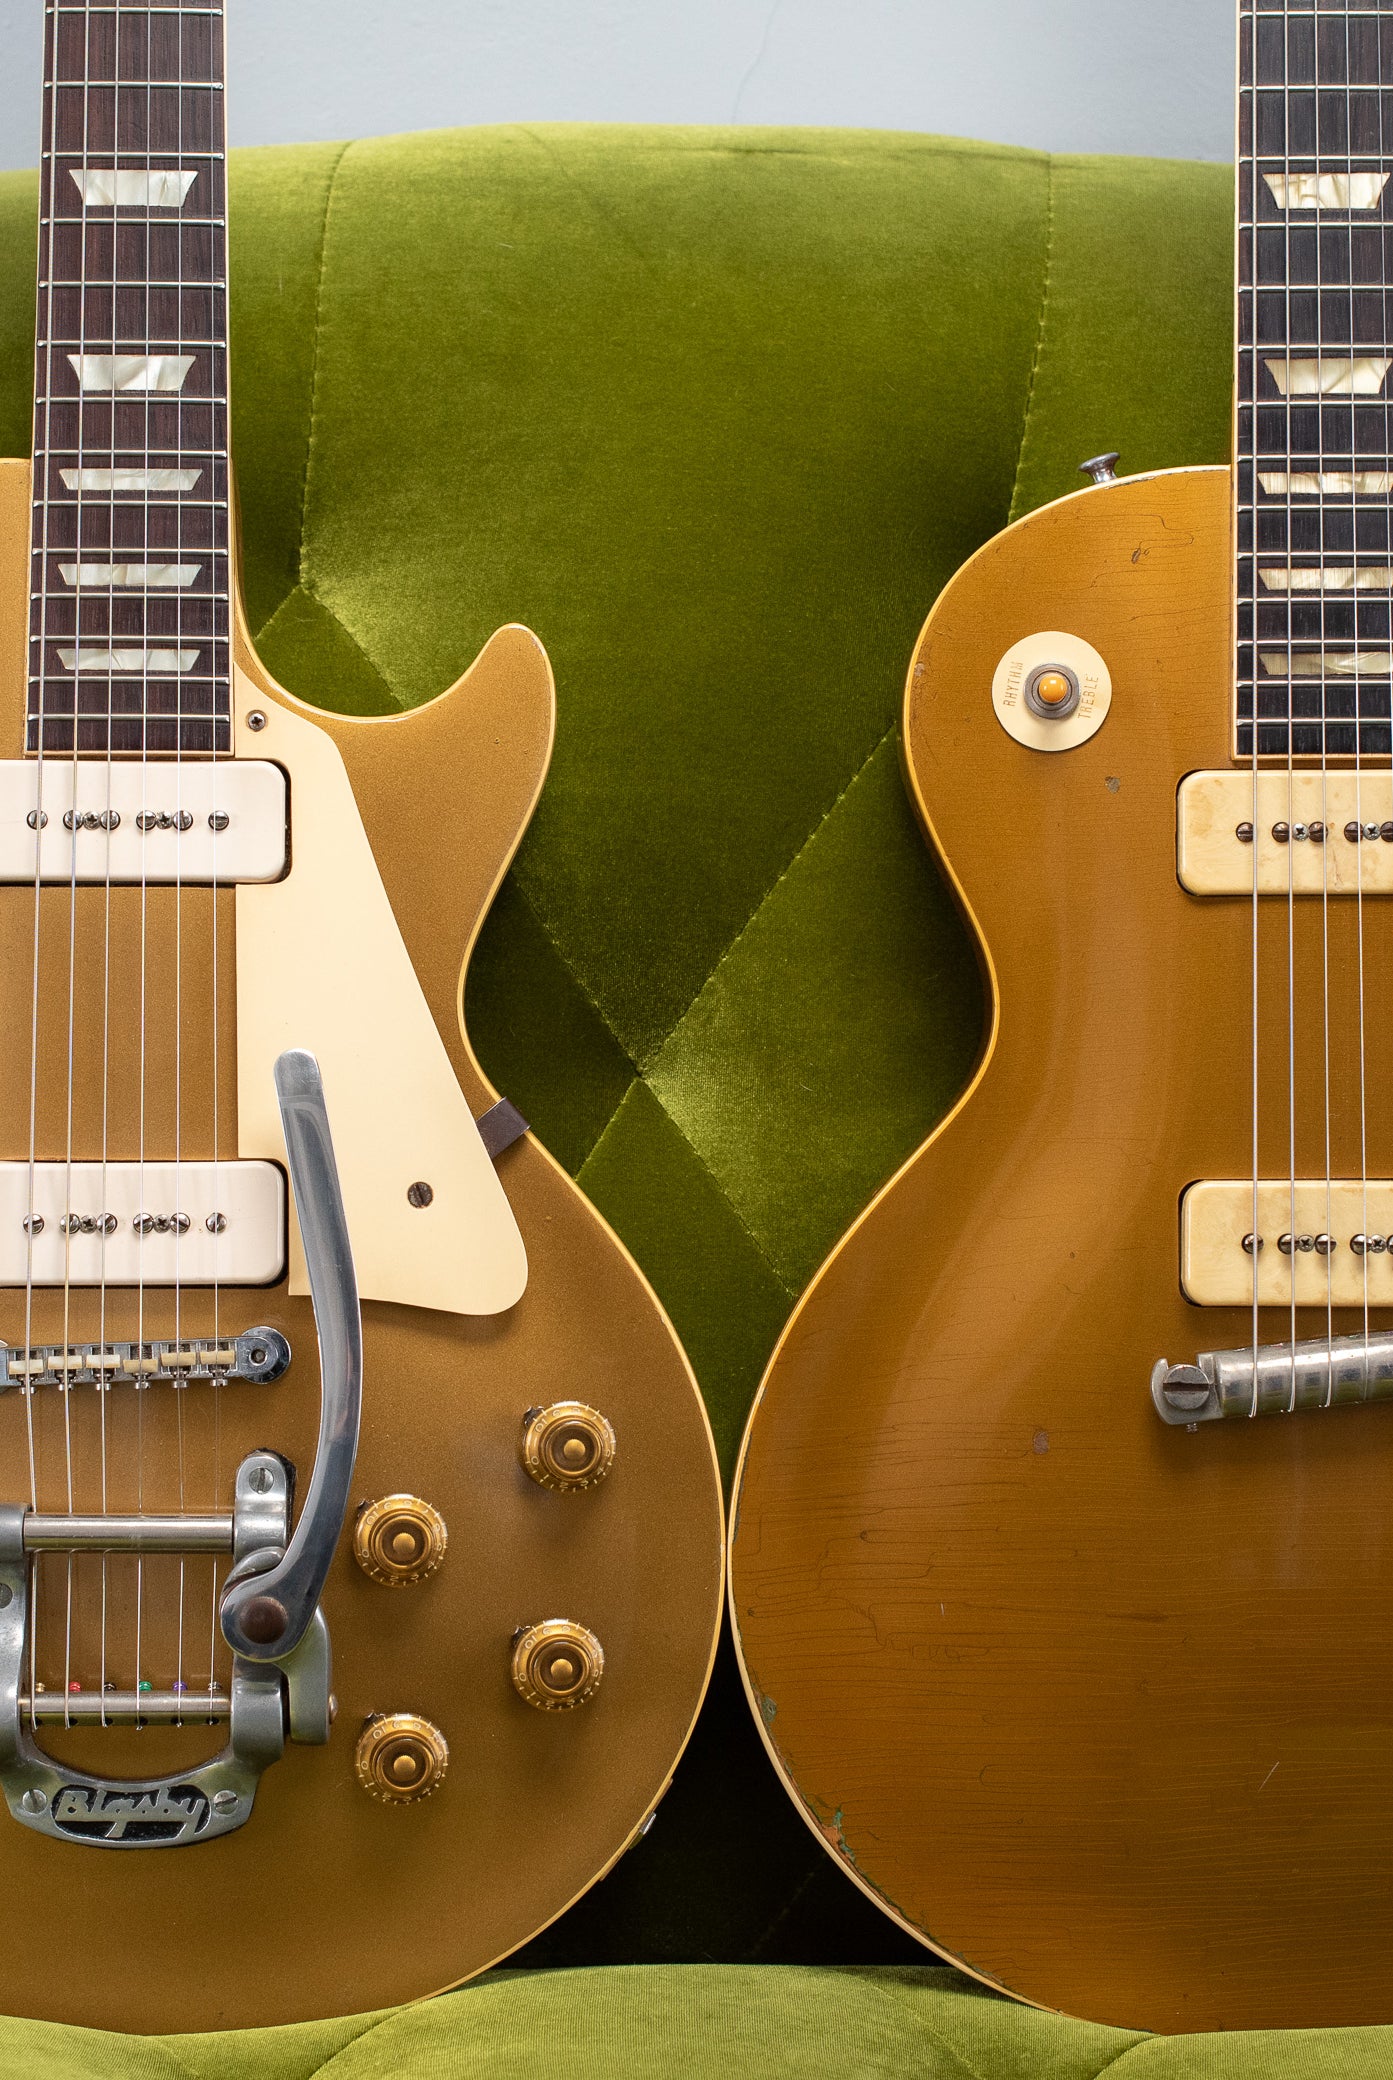 Vintage 1950s Gibson Les Paul goldtop guitars